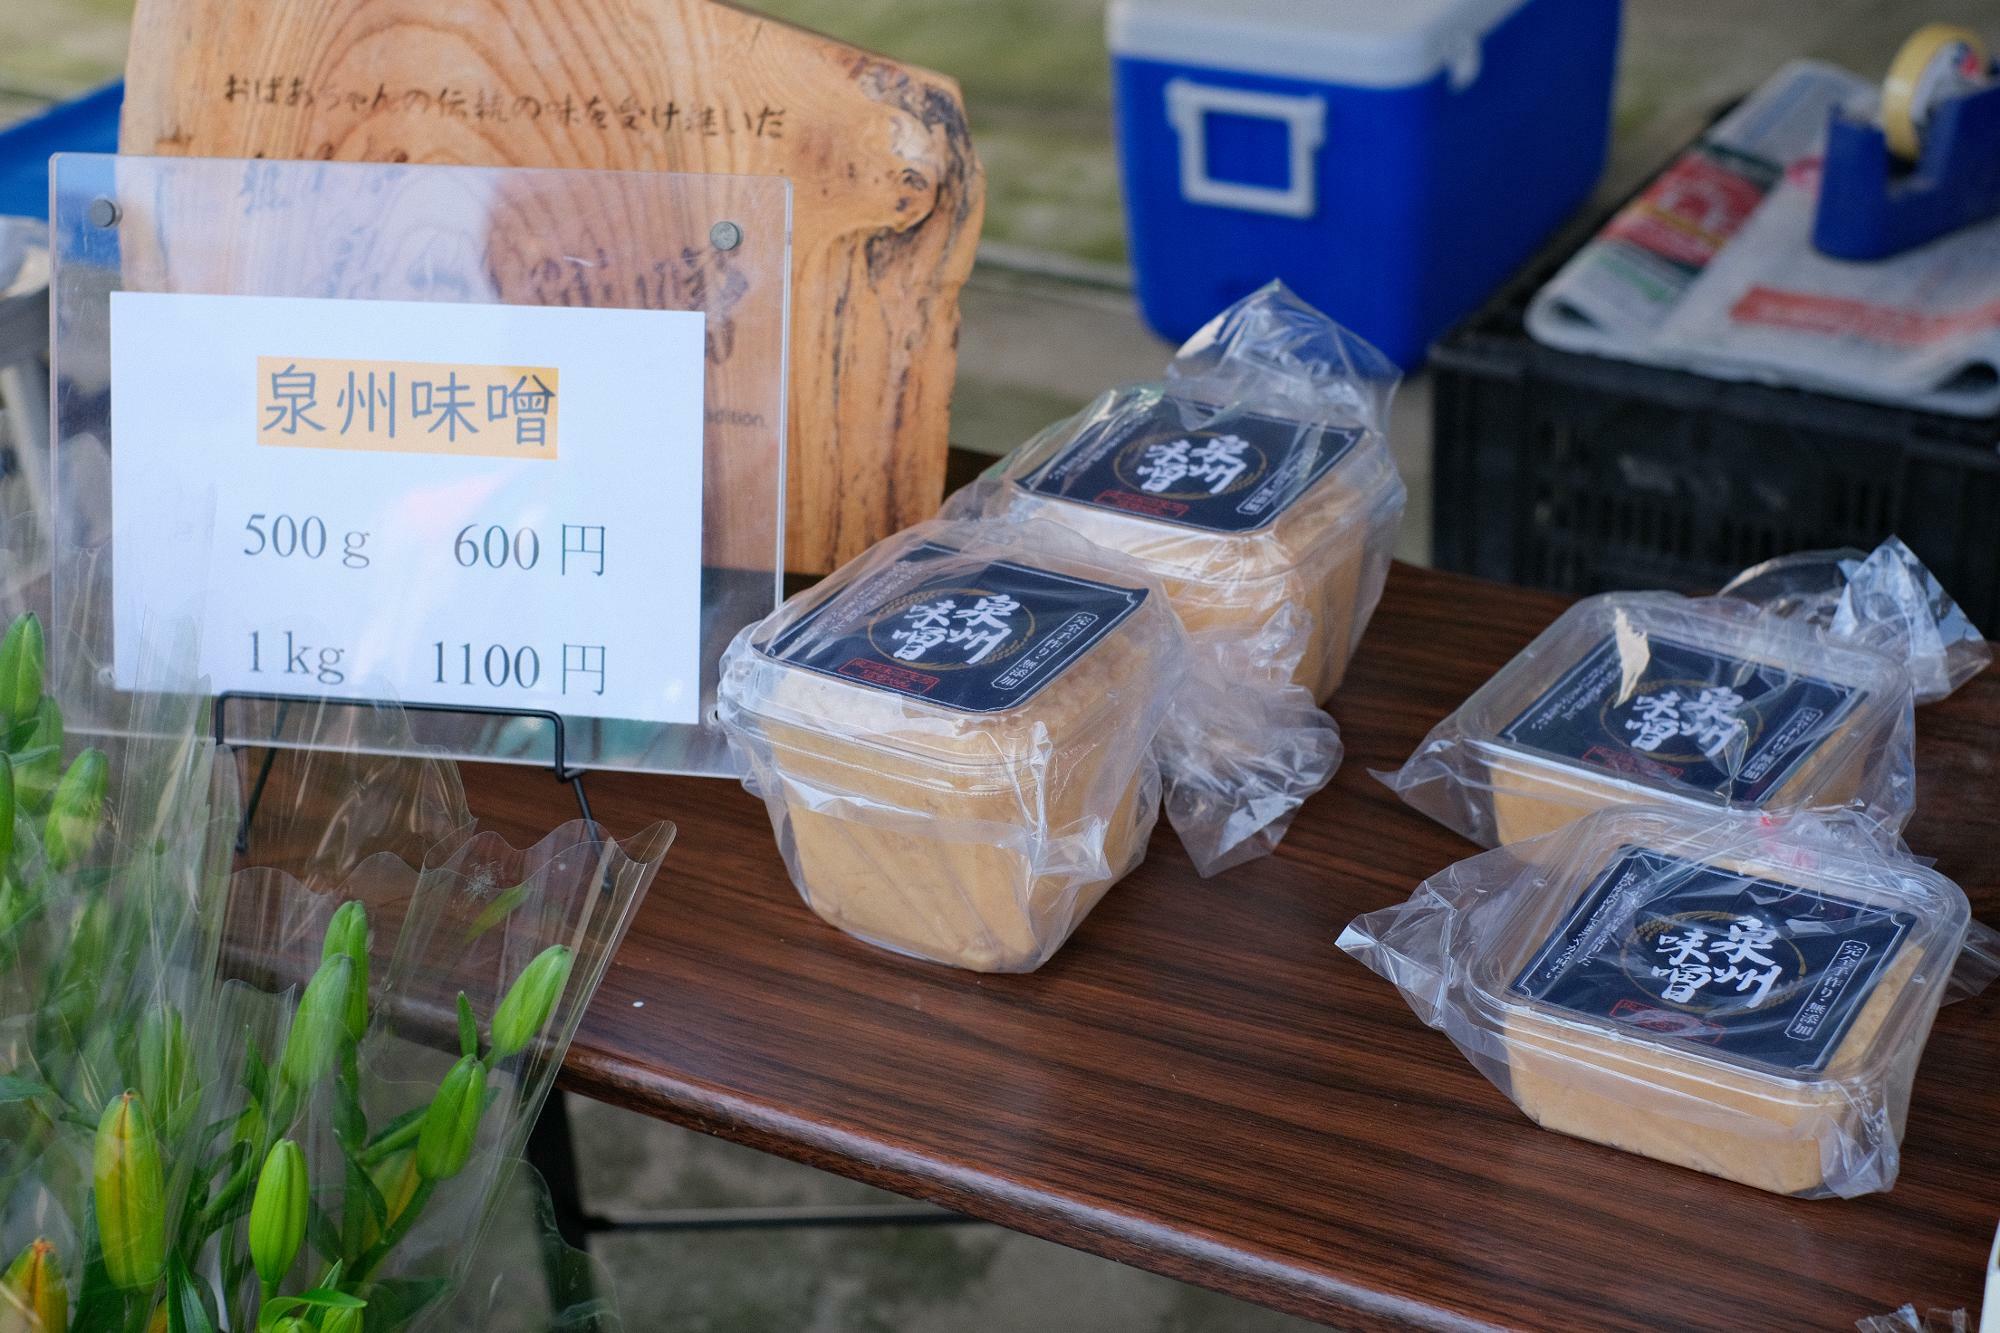 「泉州味噌」500g 600円、1kg 1100円